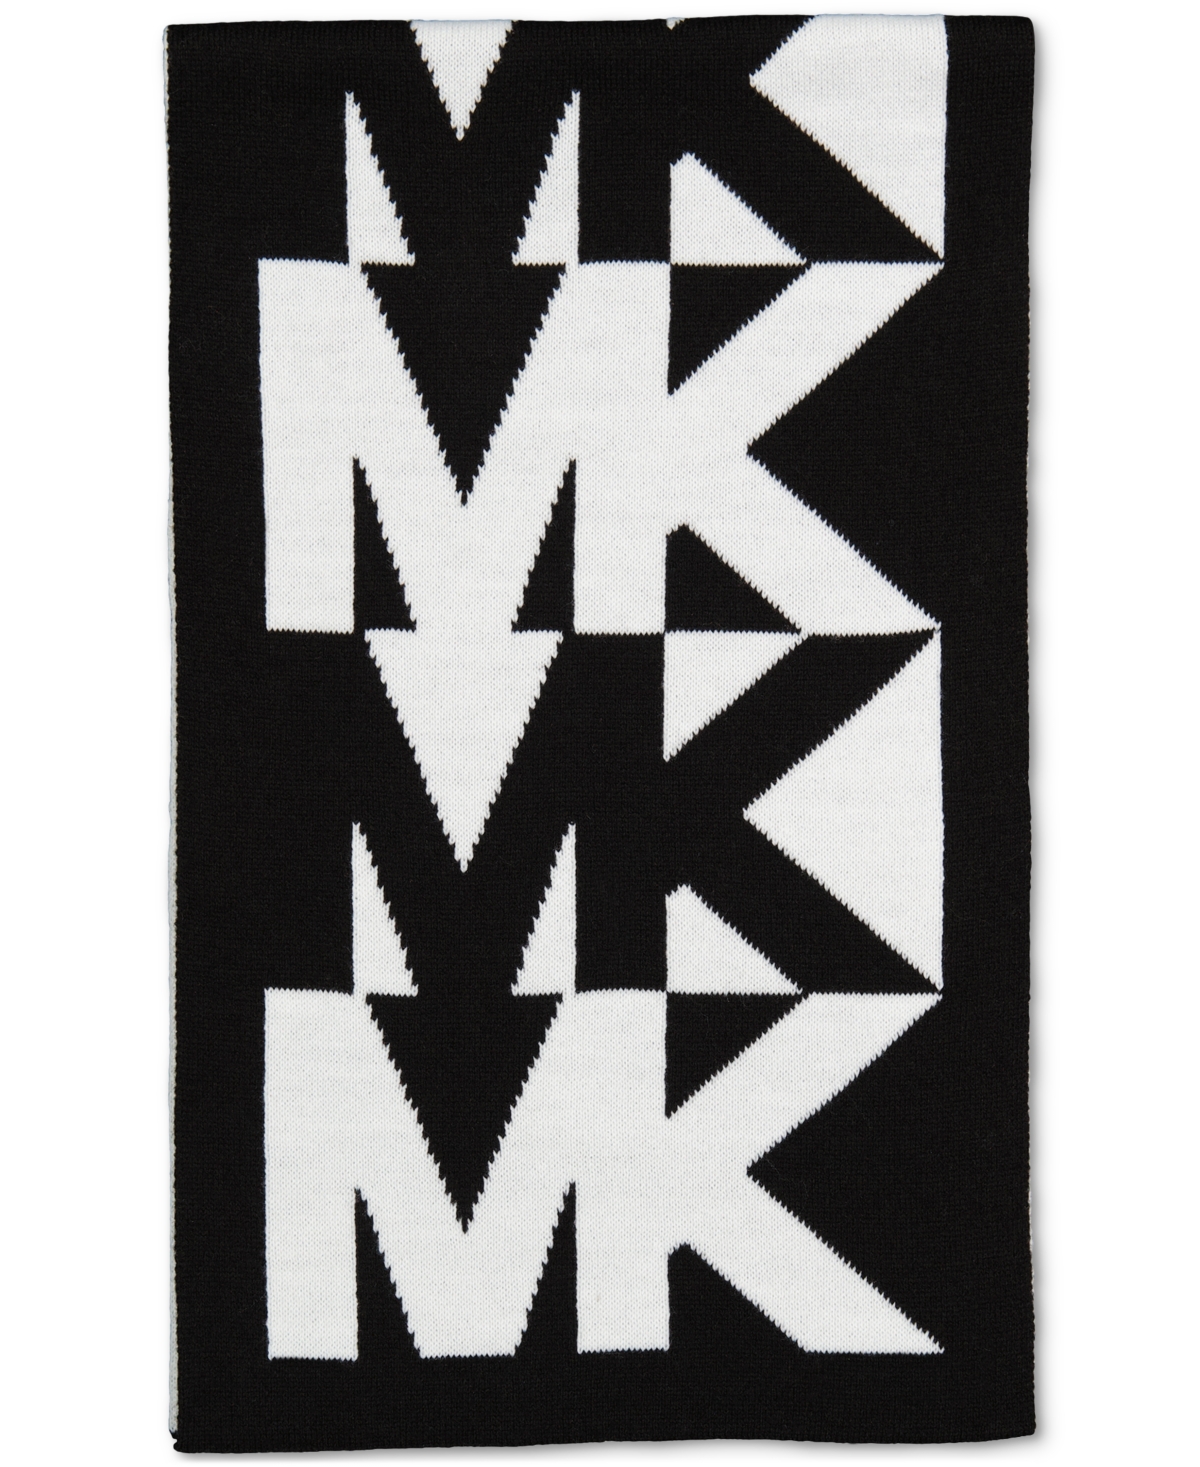 Michael Kors Michael  Women's Colorblock Stacked Logos Scarf In Black